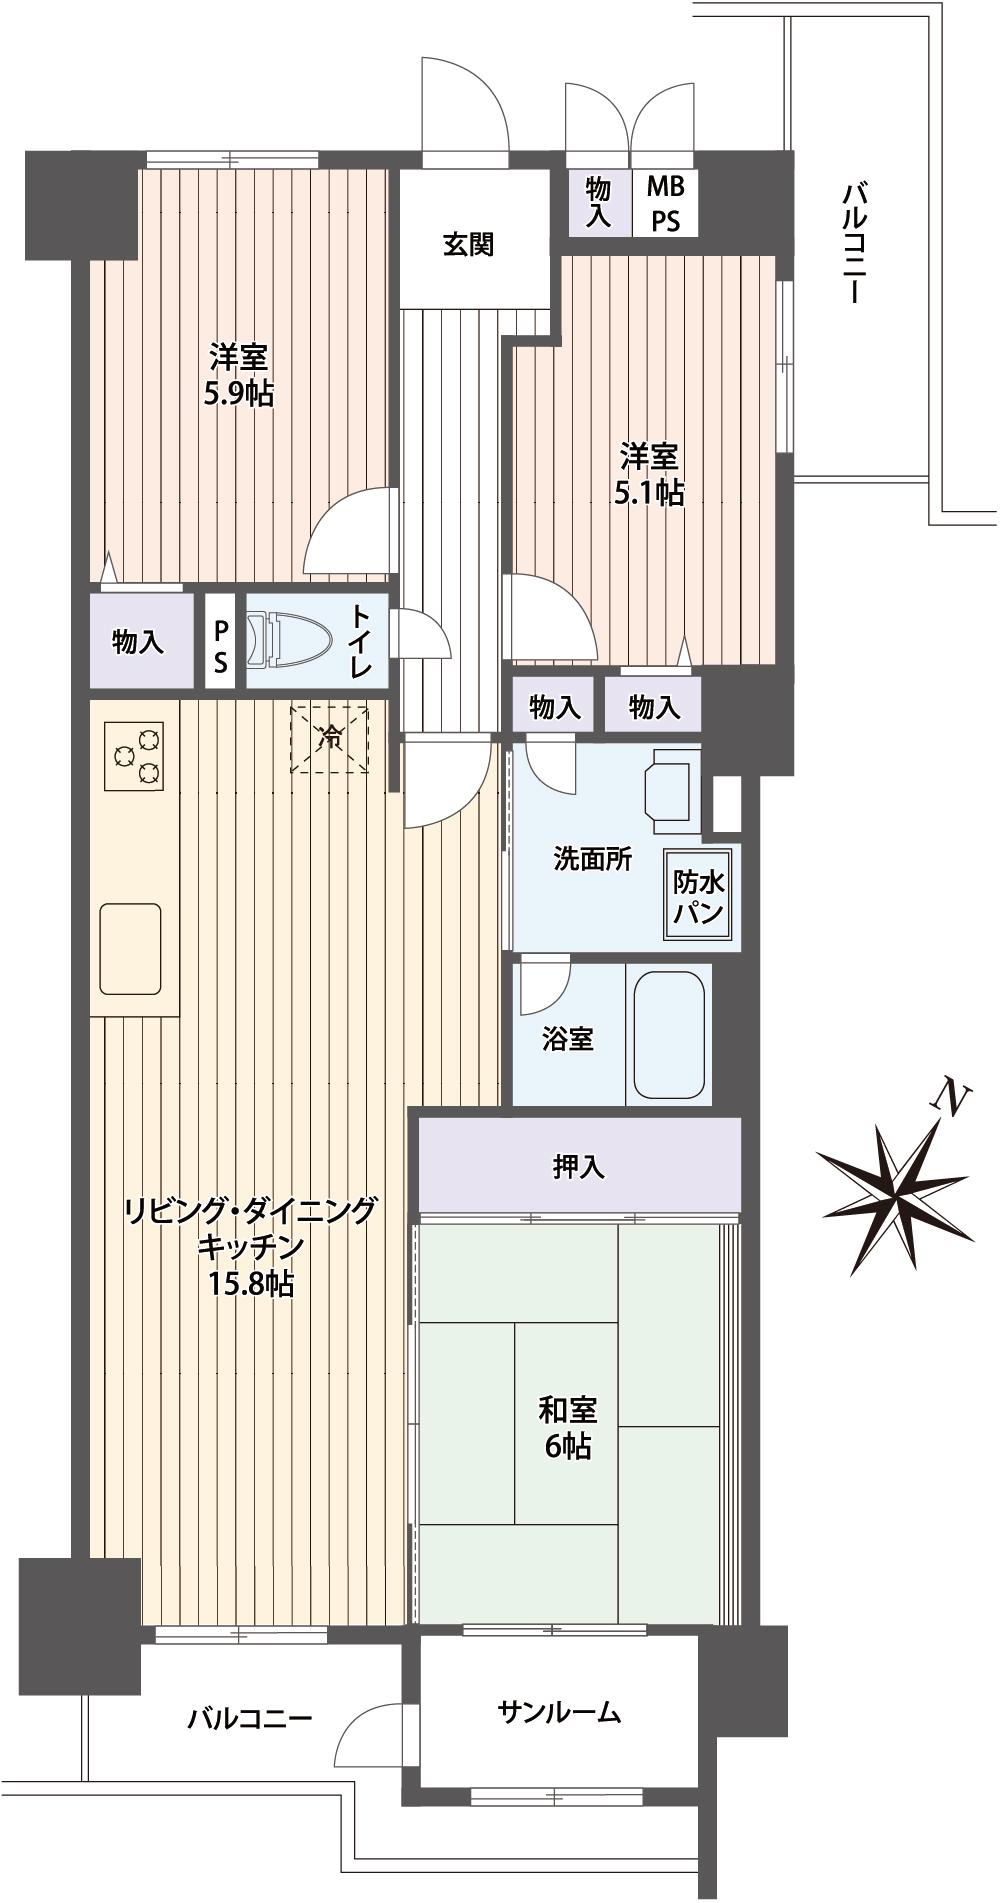 Floor plan. 3LDK + S (storeroom), Price 14.8 million yen, Occupied area 78.19 sq m , Balcony area 12.25 sq m